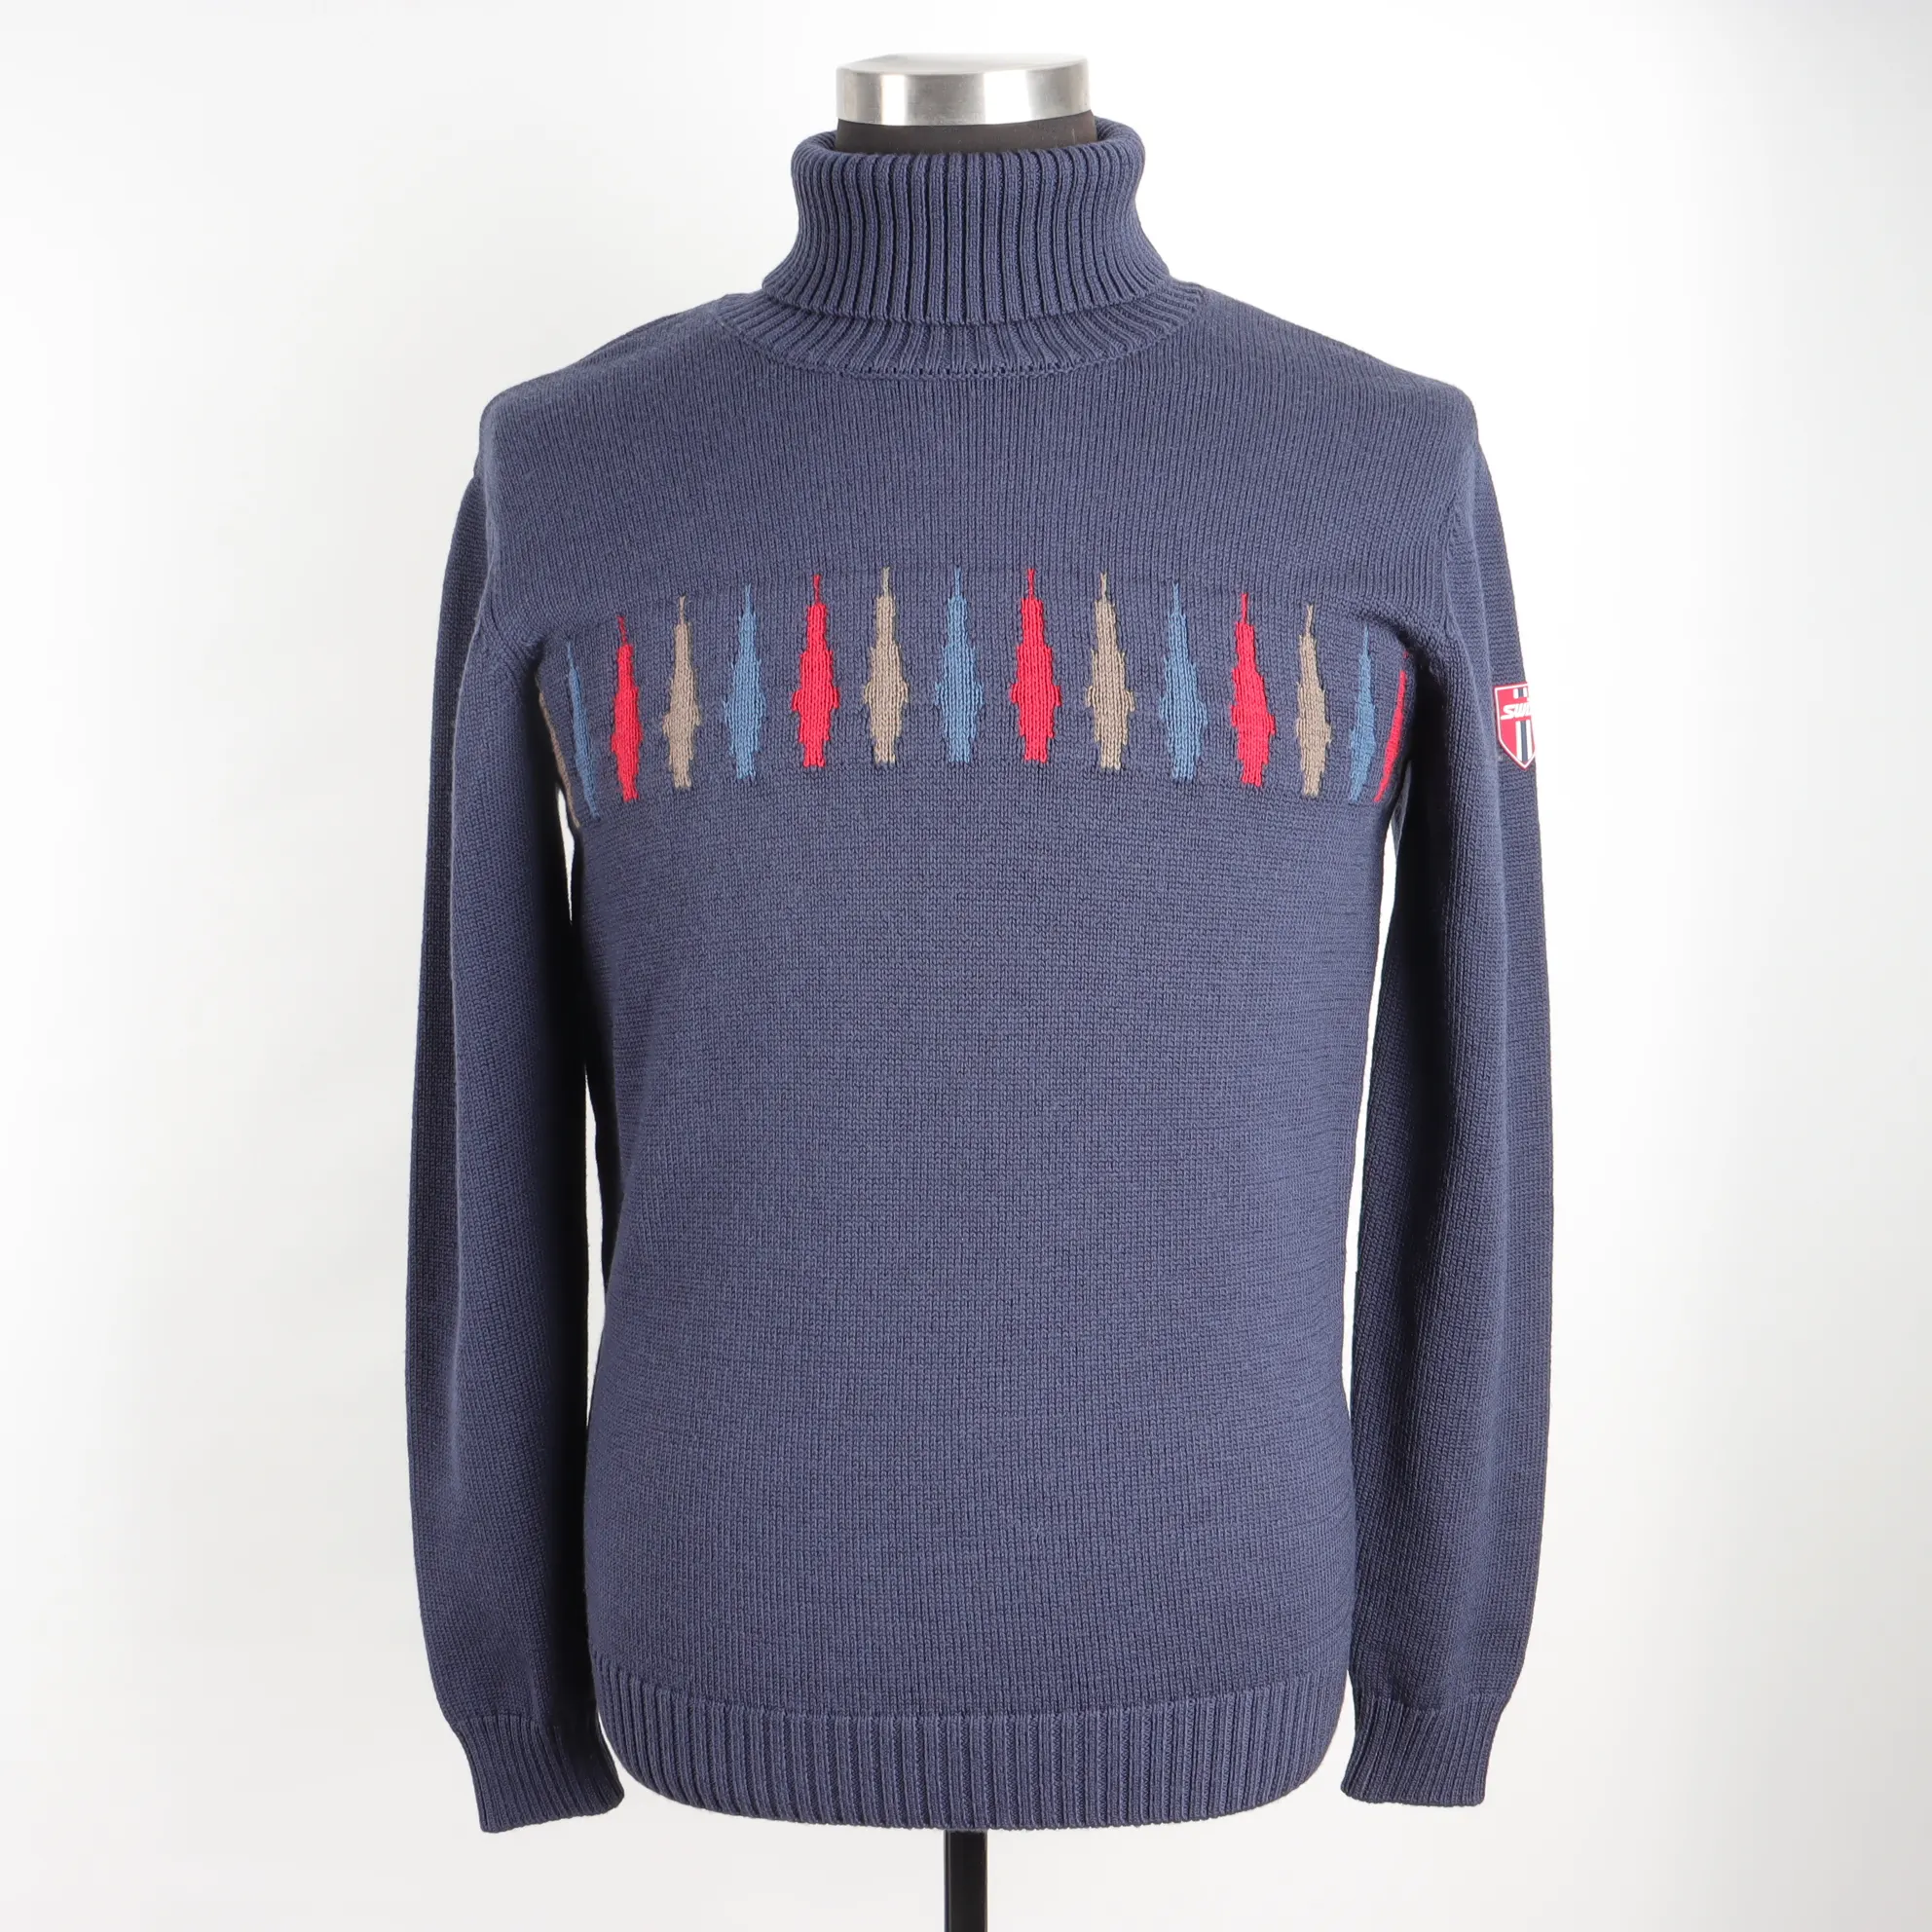 New designed merino wool mens sweater long sleeve pullover